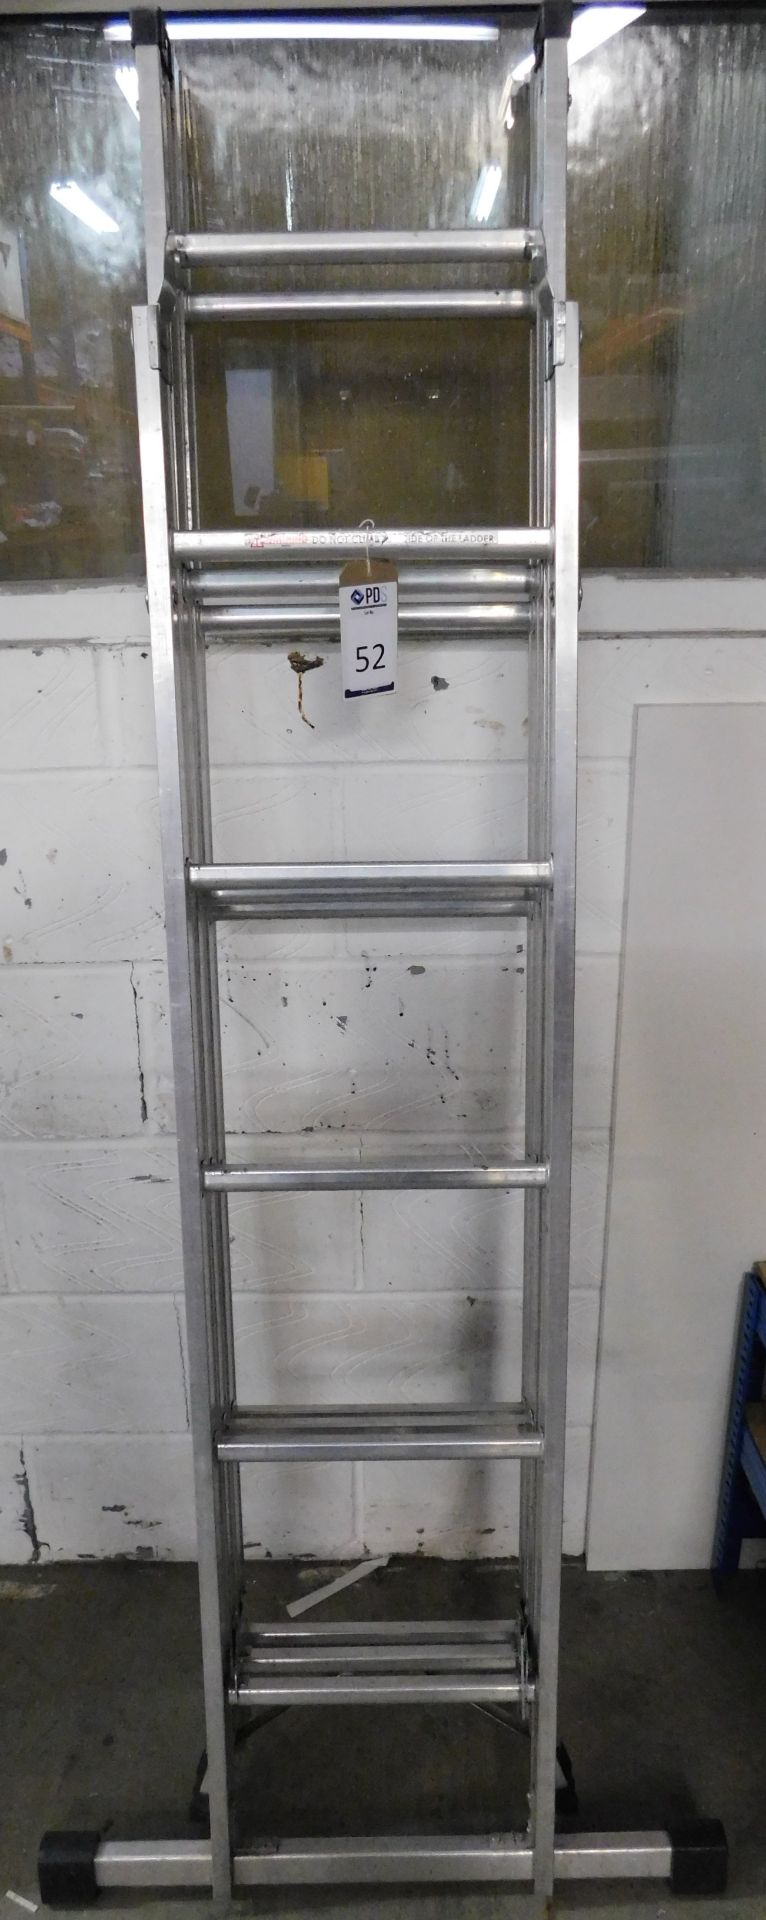 Aluminium Ladders (Location: Tonbridge, Kent. Please Refer to General Notes)